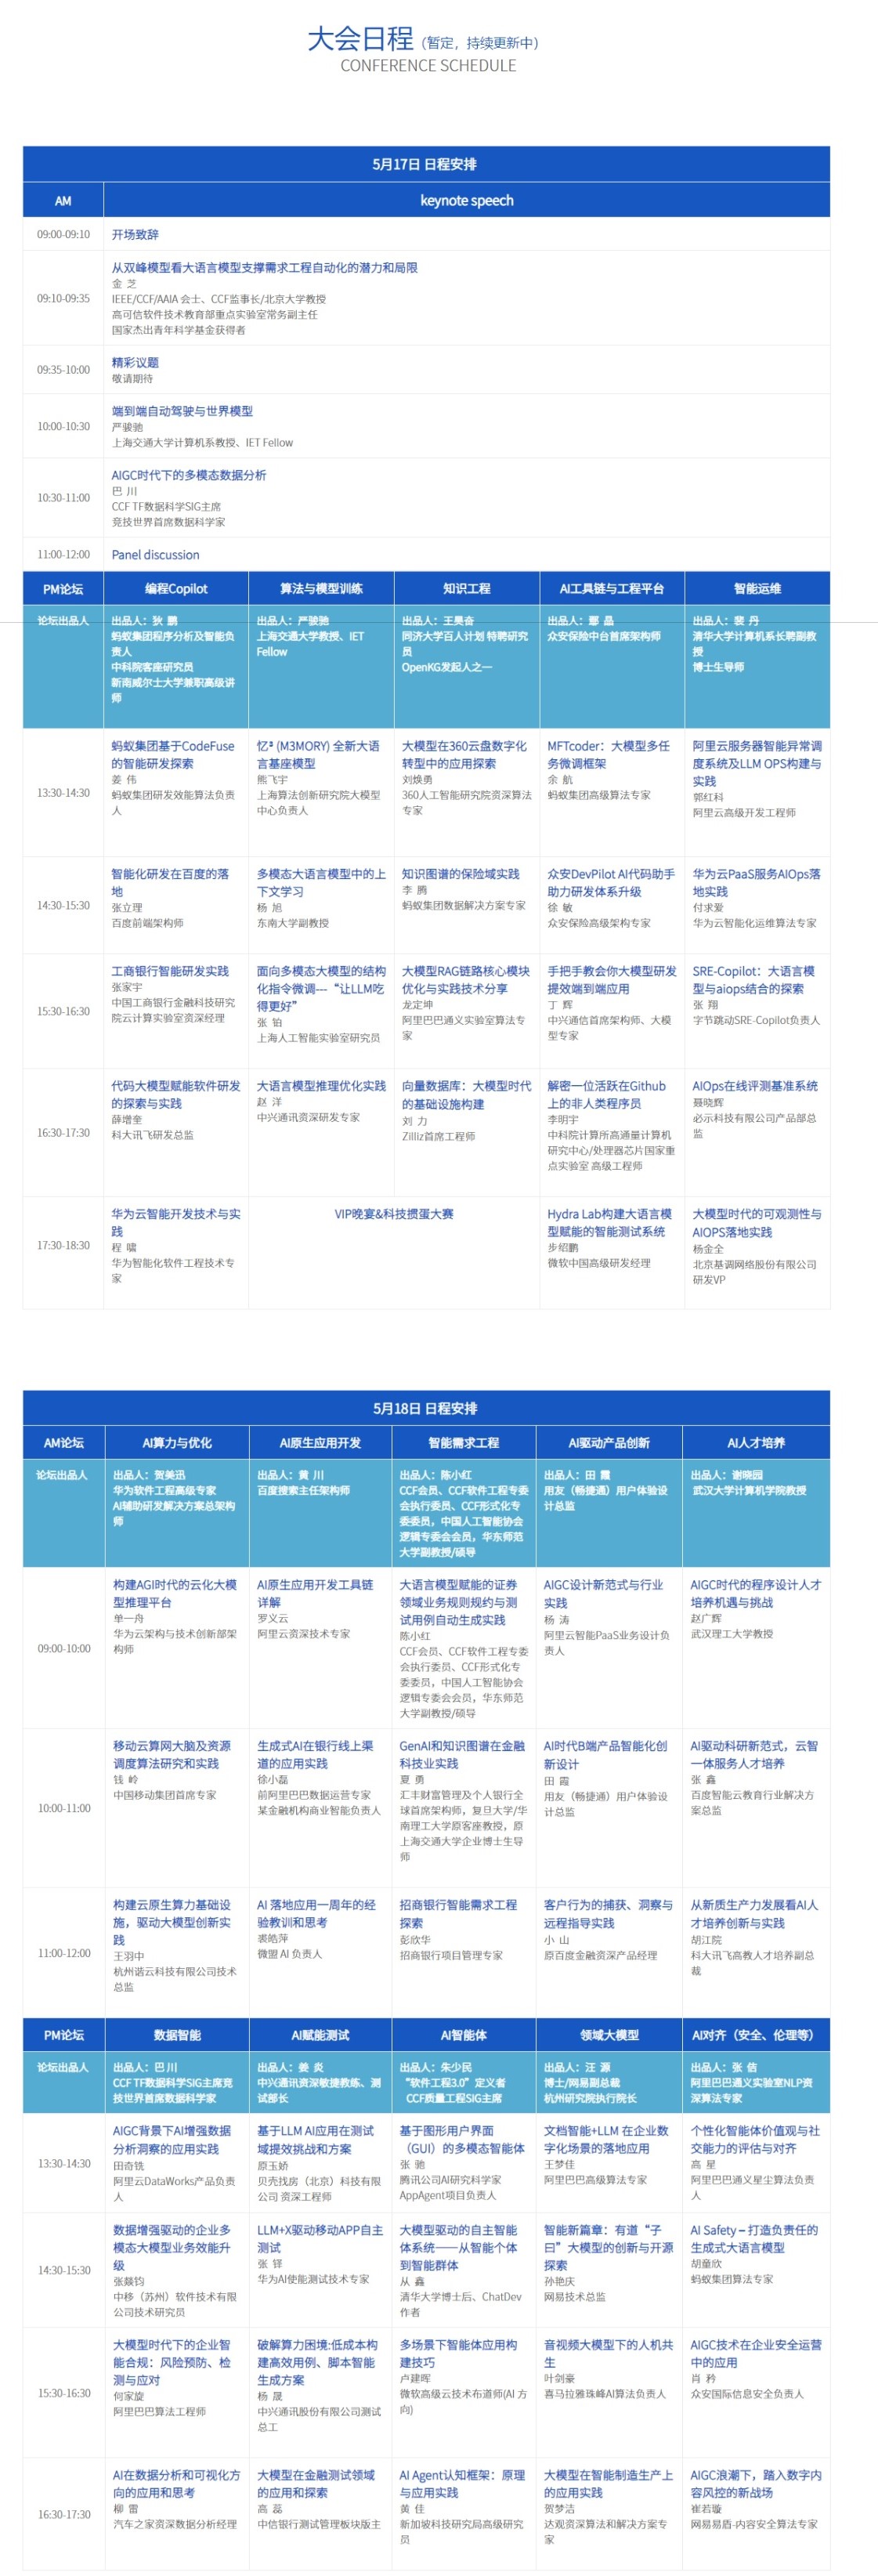 AI+研发数字峰会（AiDD2024）深圳站